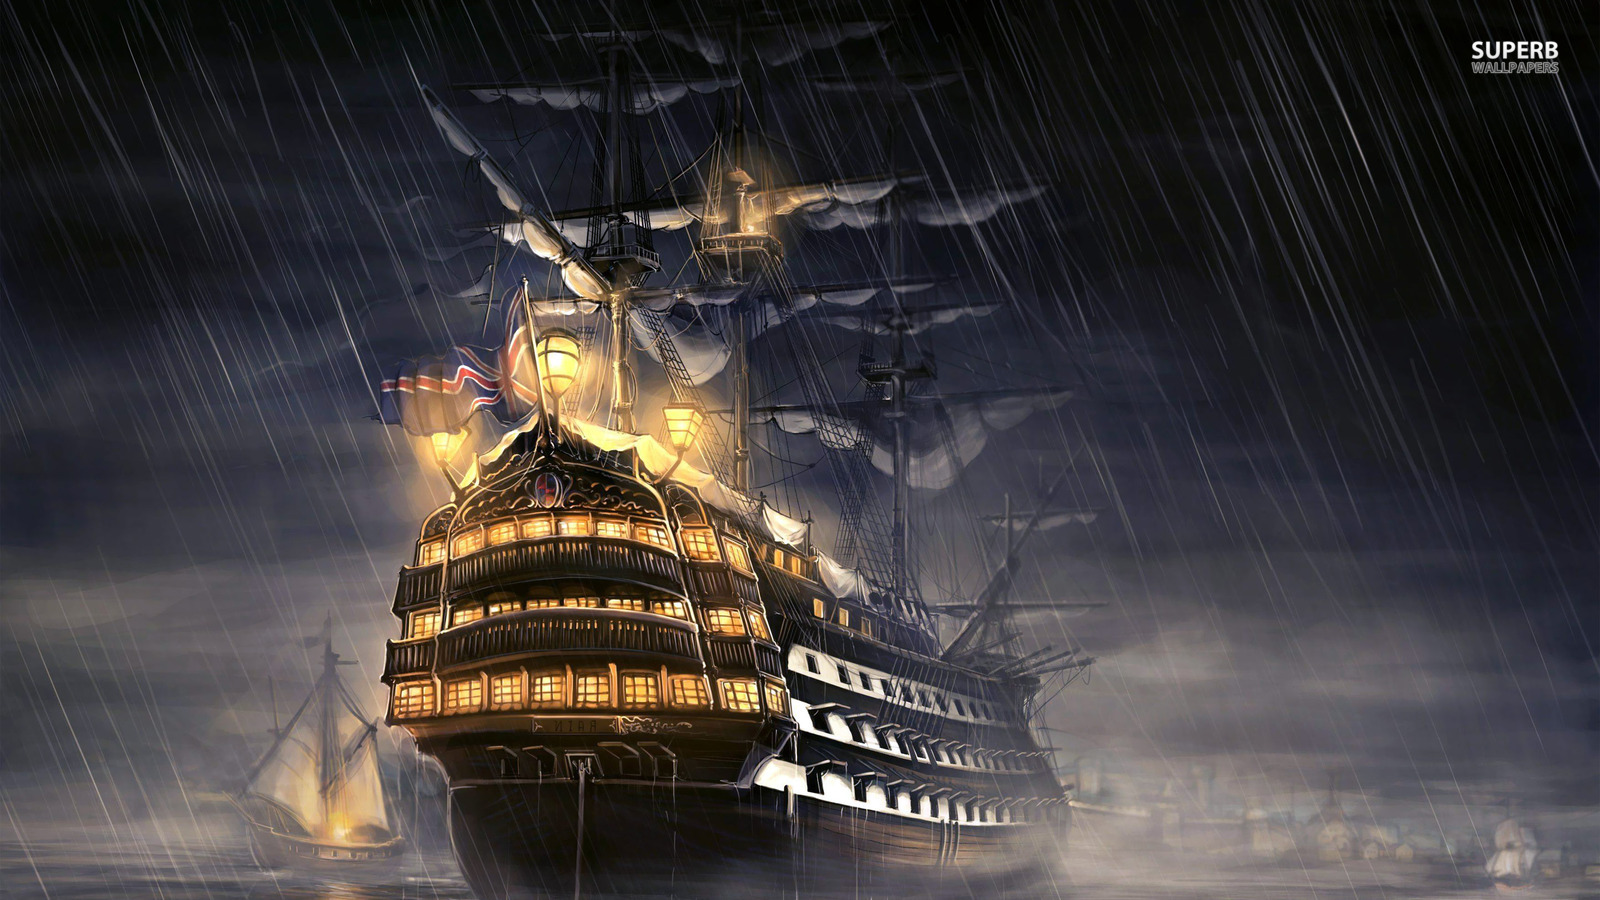 Pirates Image Pirate Ship HD Wallpaper And